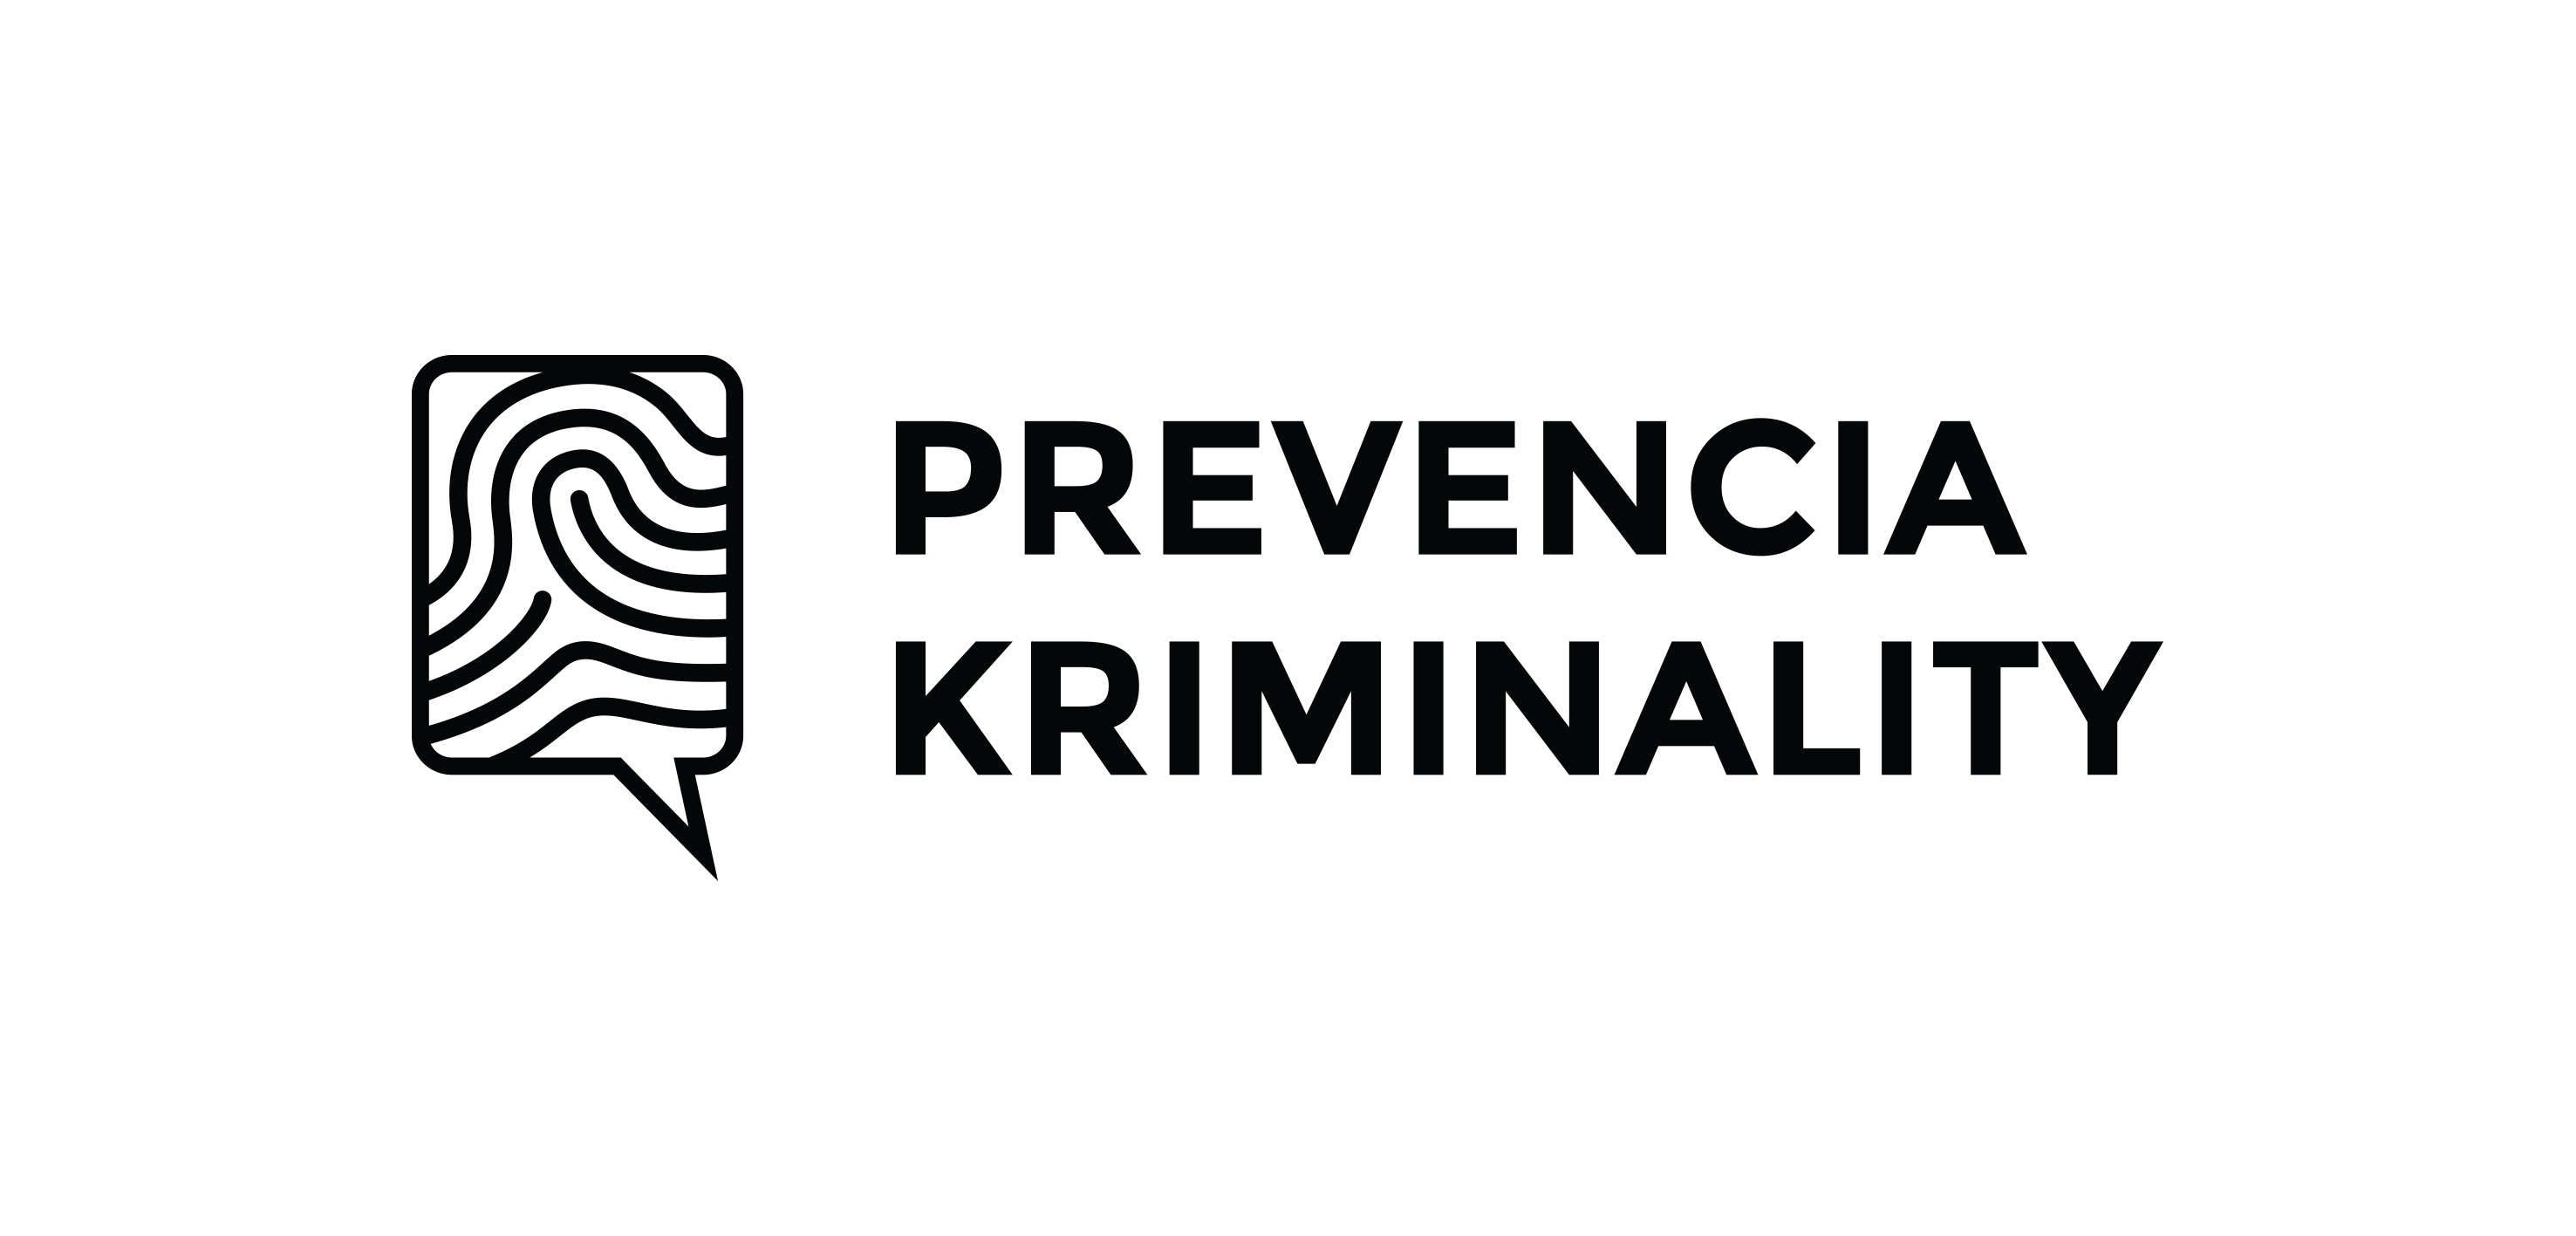 prevencia kriminality logo black